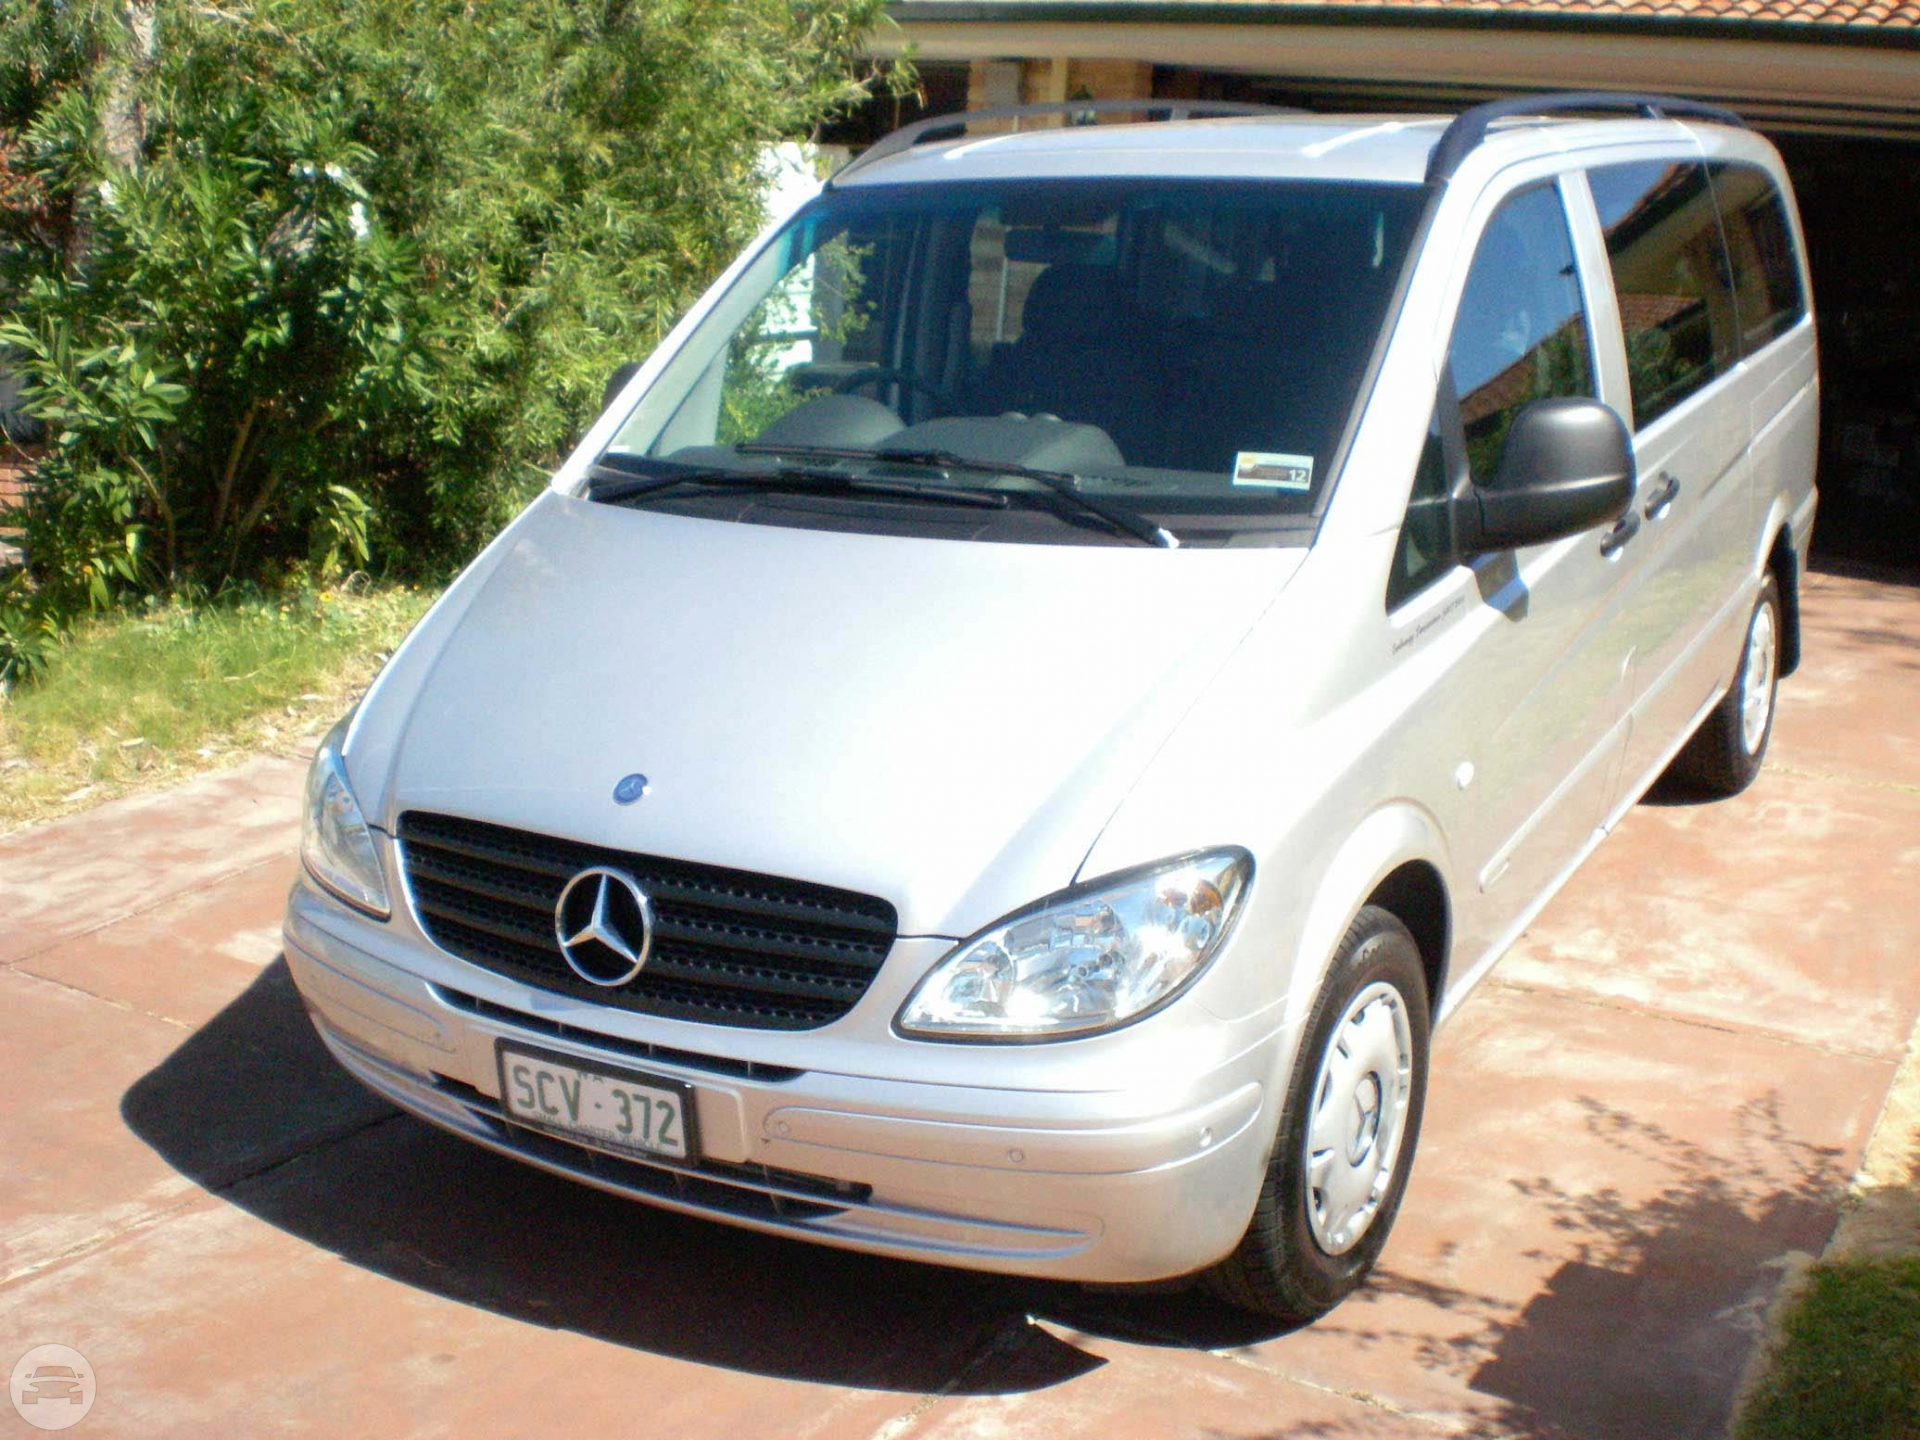 Mercedes Vito Luxury MPV Wagon
SUV /
Padbury WA 6025, Australia

 / Hourly AUD$ 0.00
